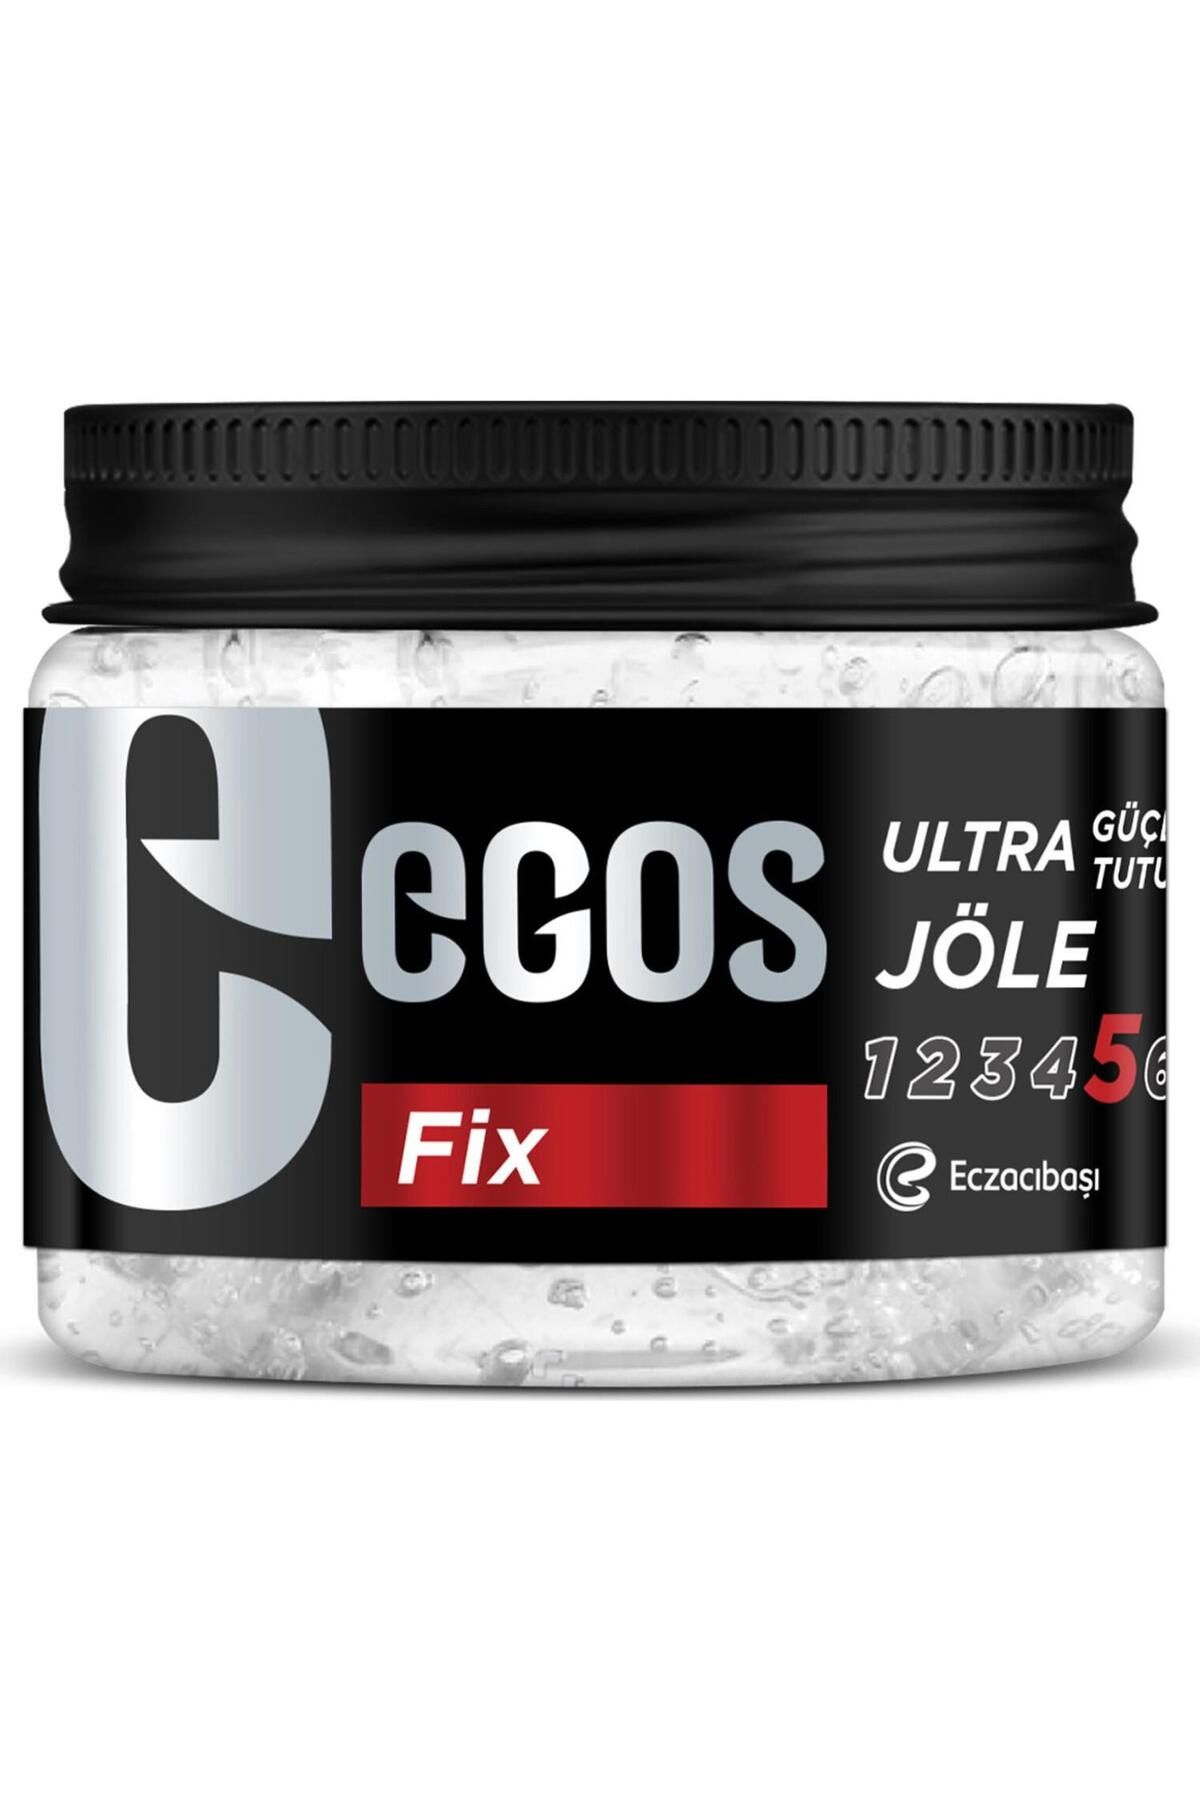 Egos Jöle 400 ml No: 5 Ultra Güçlü Tutuş // Fix